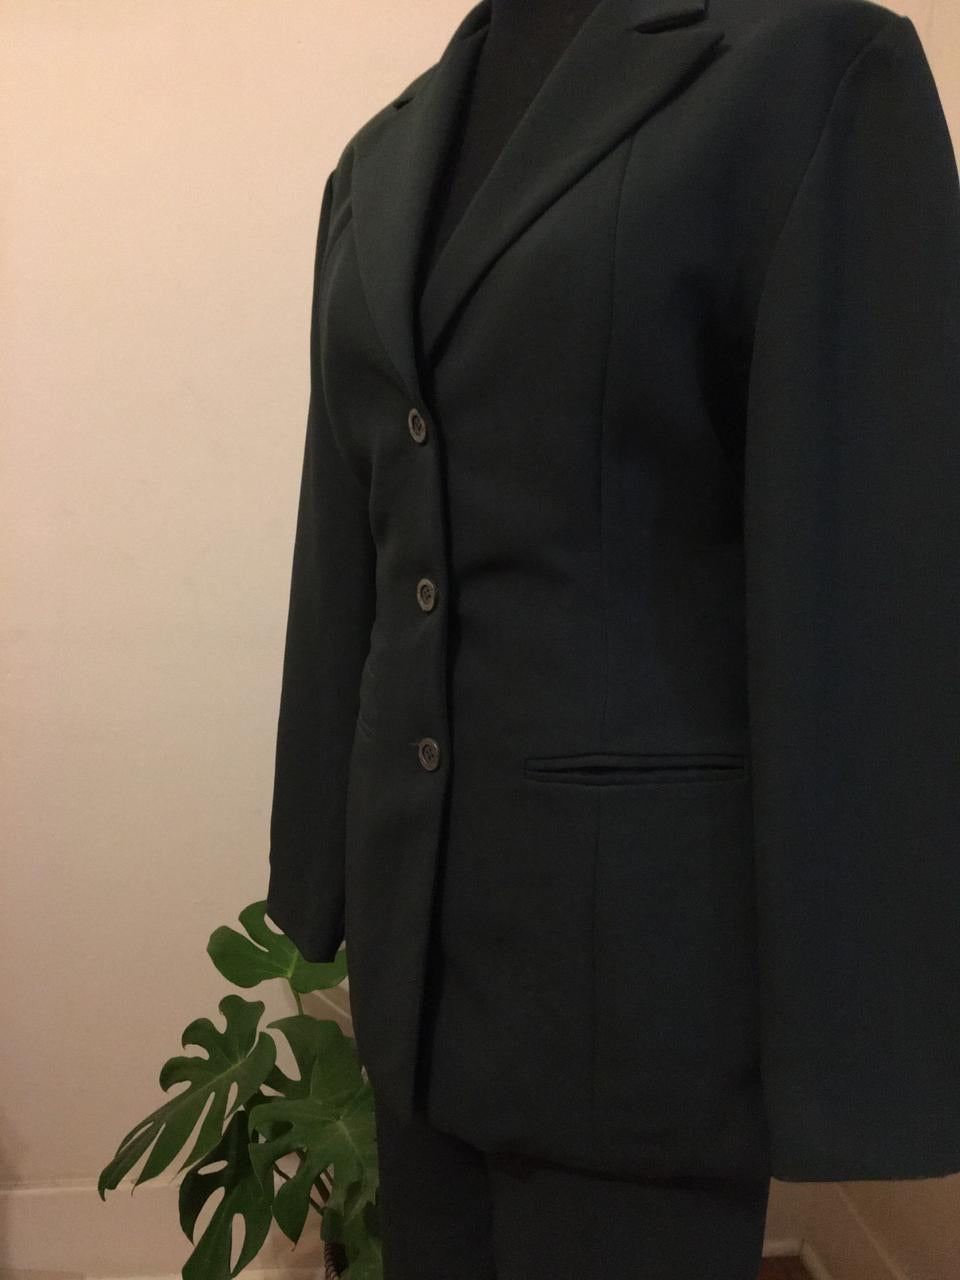 Vintage Green Suit